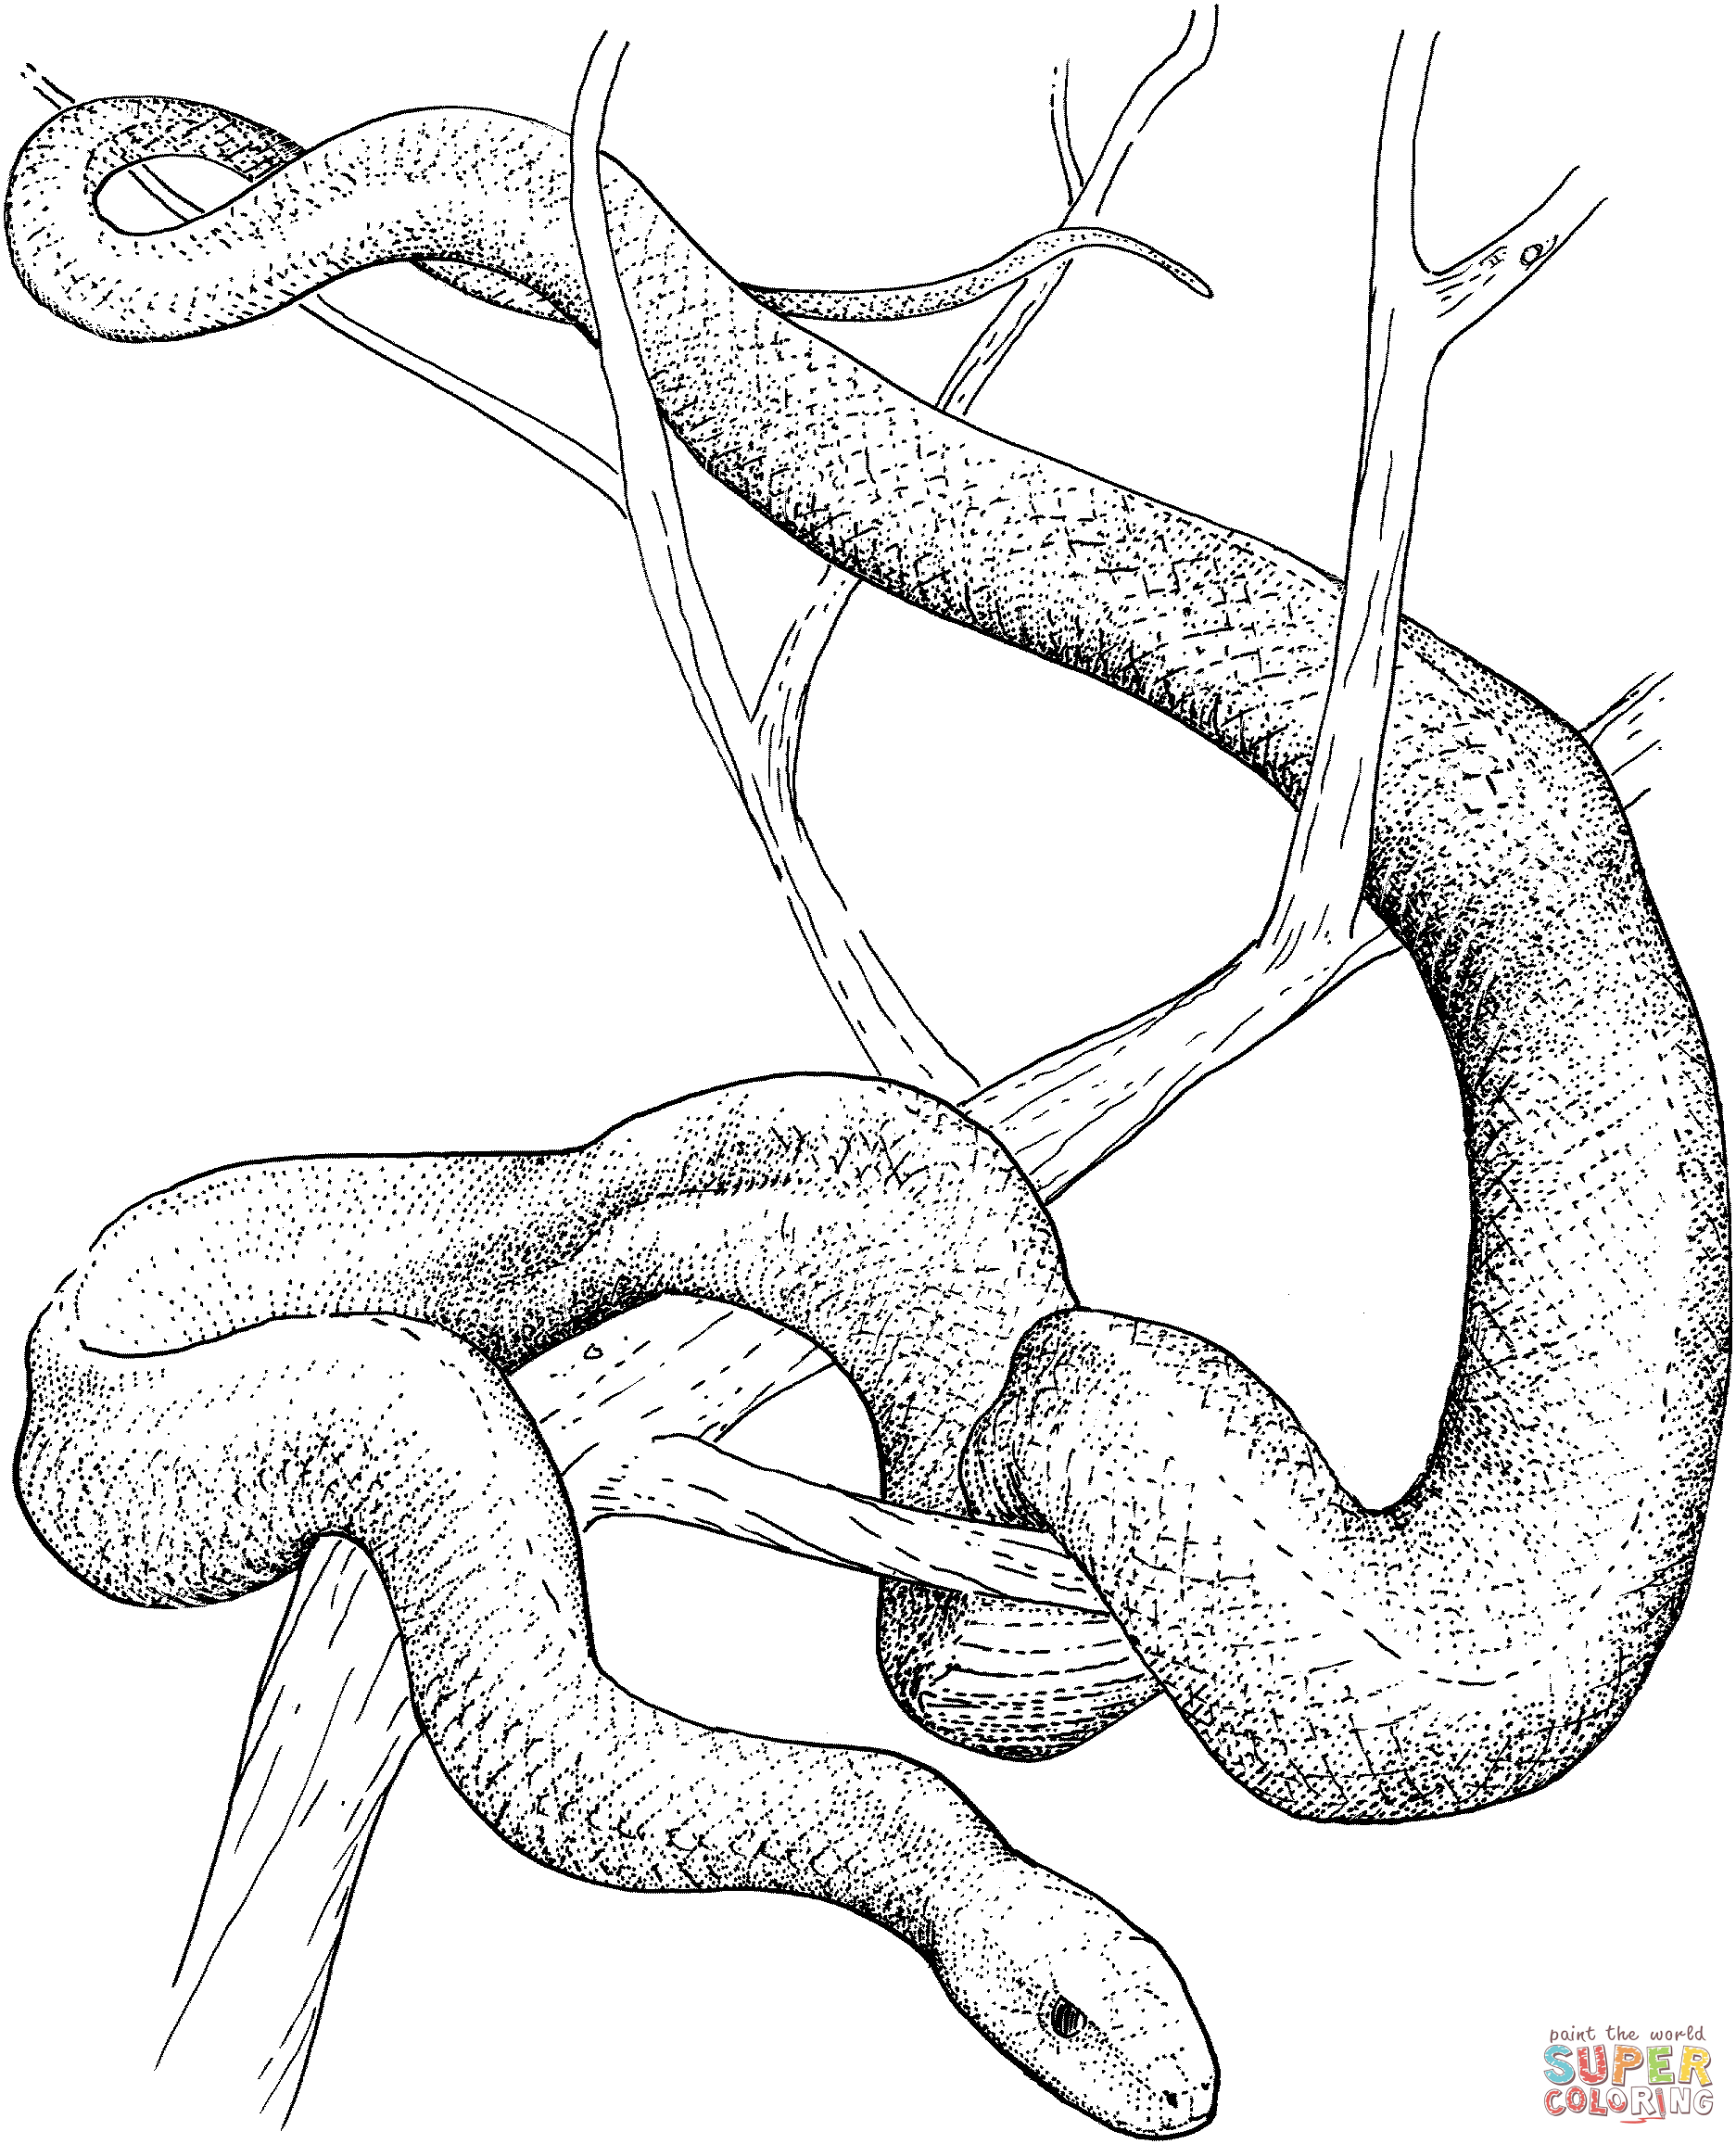 Eastern Diamondback Rattlesnake coloring #11, Download drawings